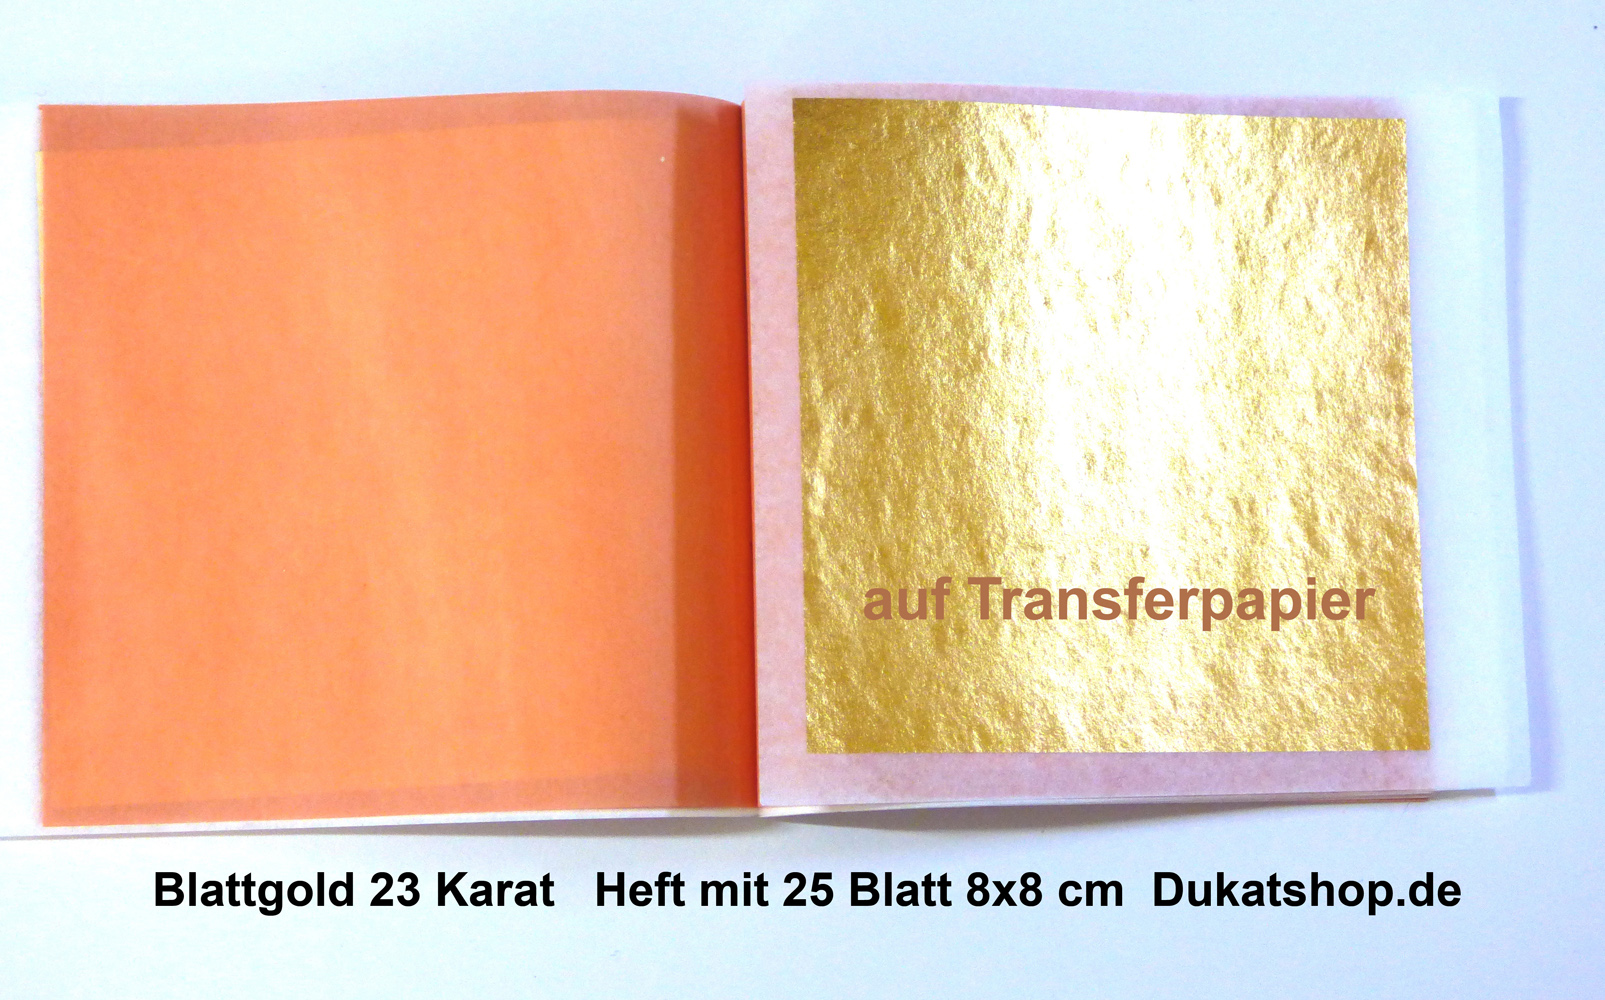 1 Heft, 23 Karat 14 Gr., 8x8 cm, Transferpapier